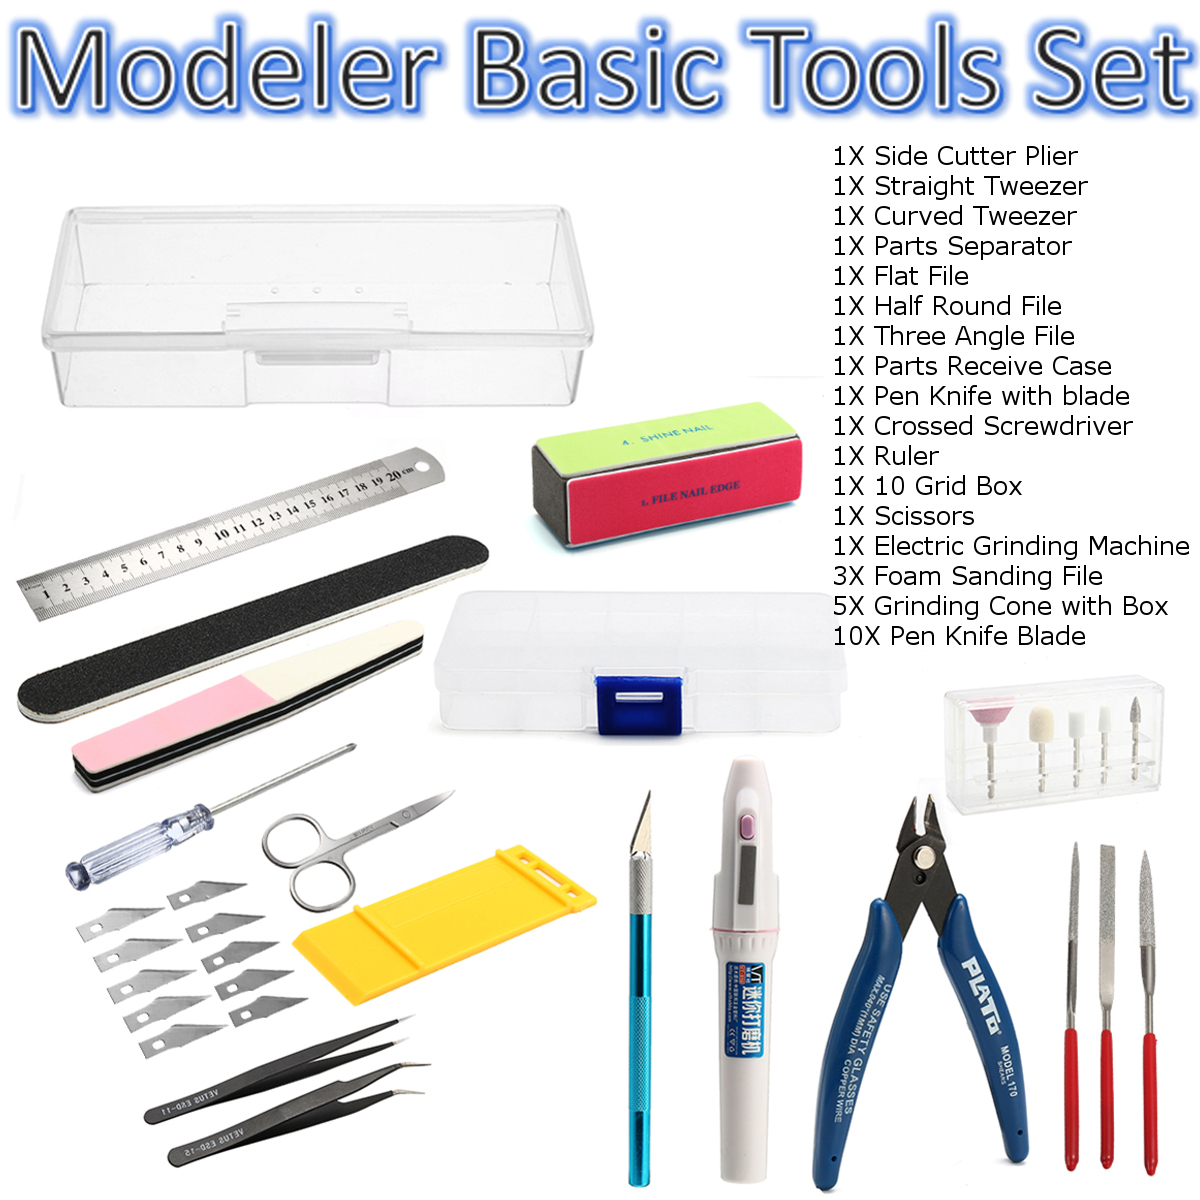 Gundam-Modeler-Tools-Model-Building-Basic-Tools-Kit--Craft-Set-Car-Model-Building-Repair-Fix-Set-1299320-1